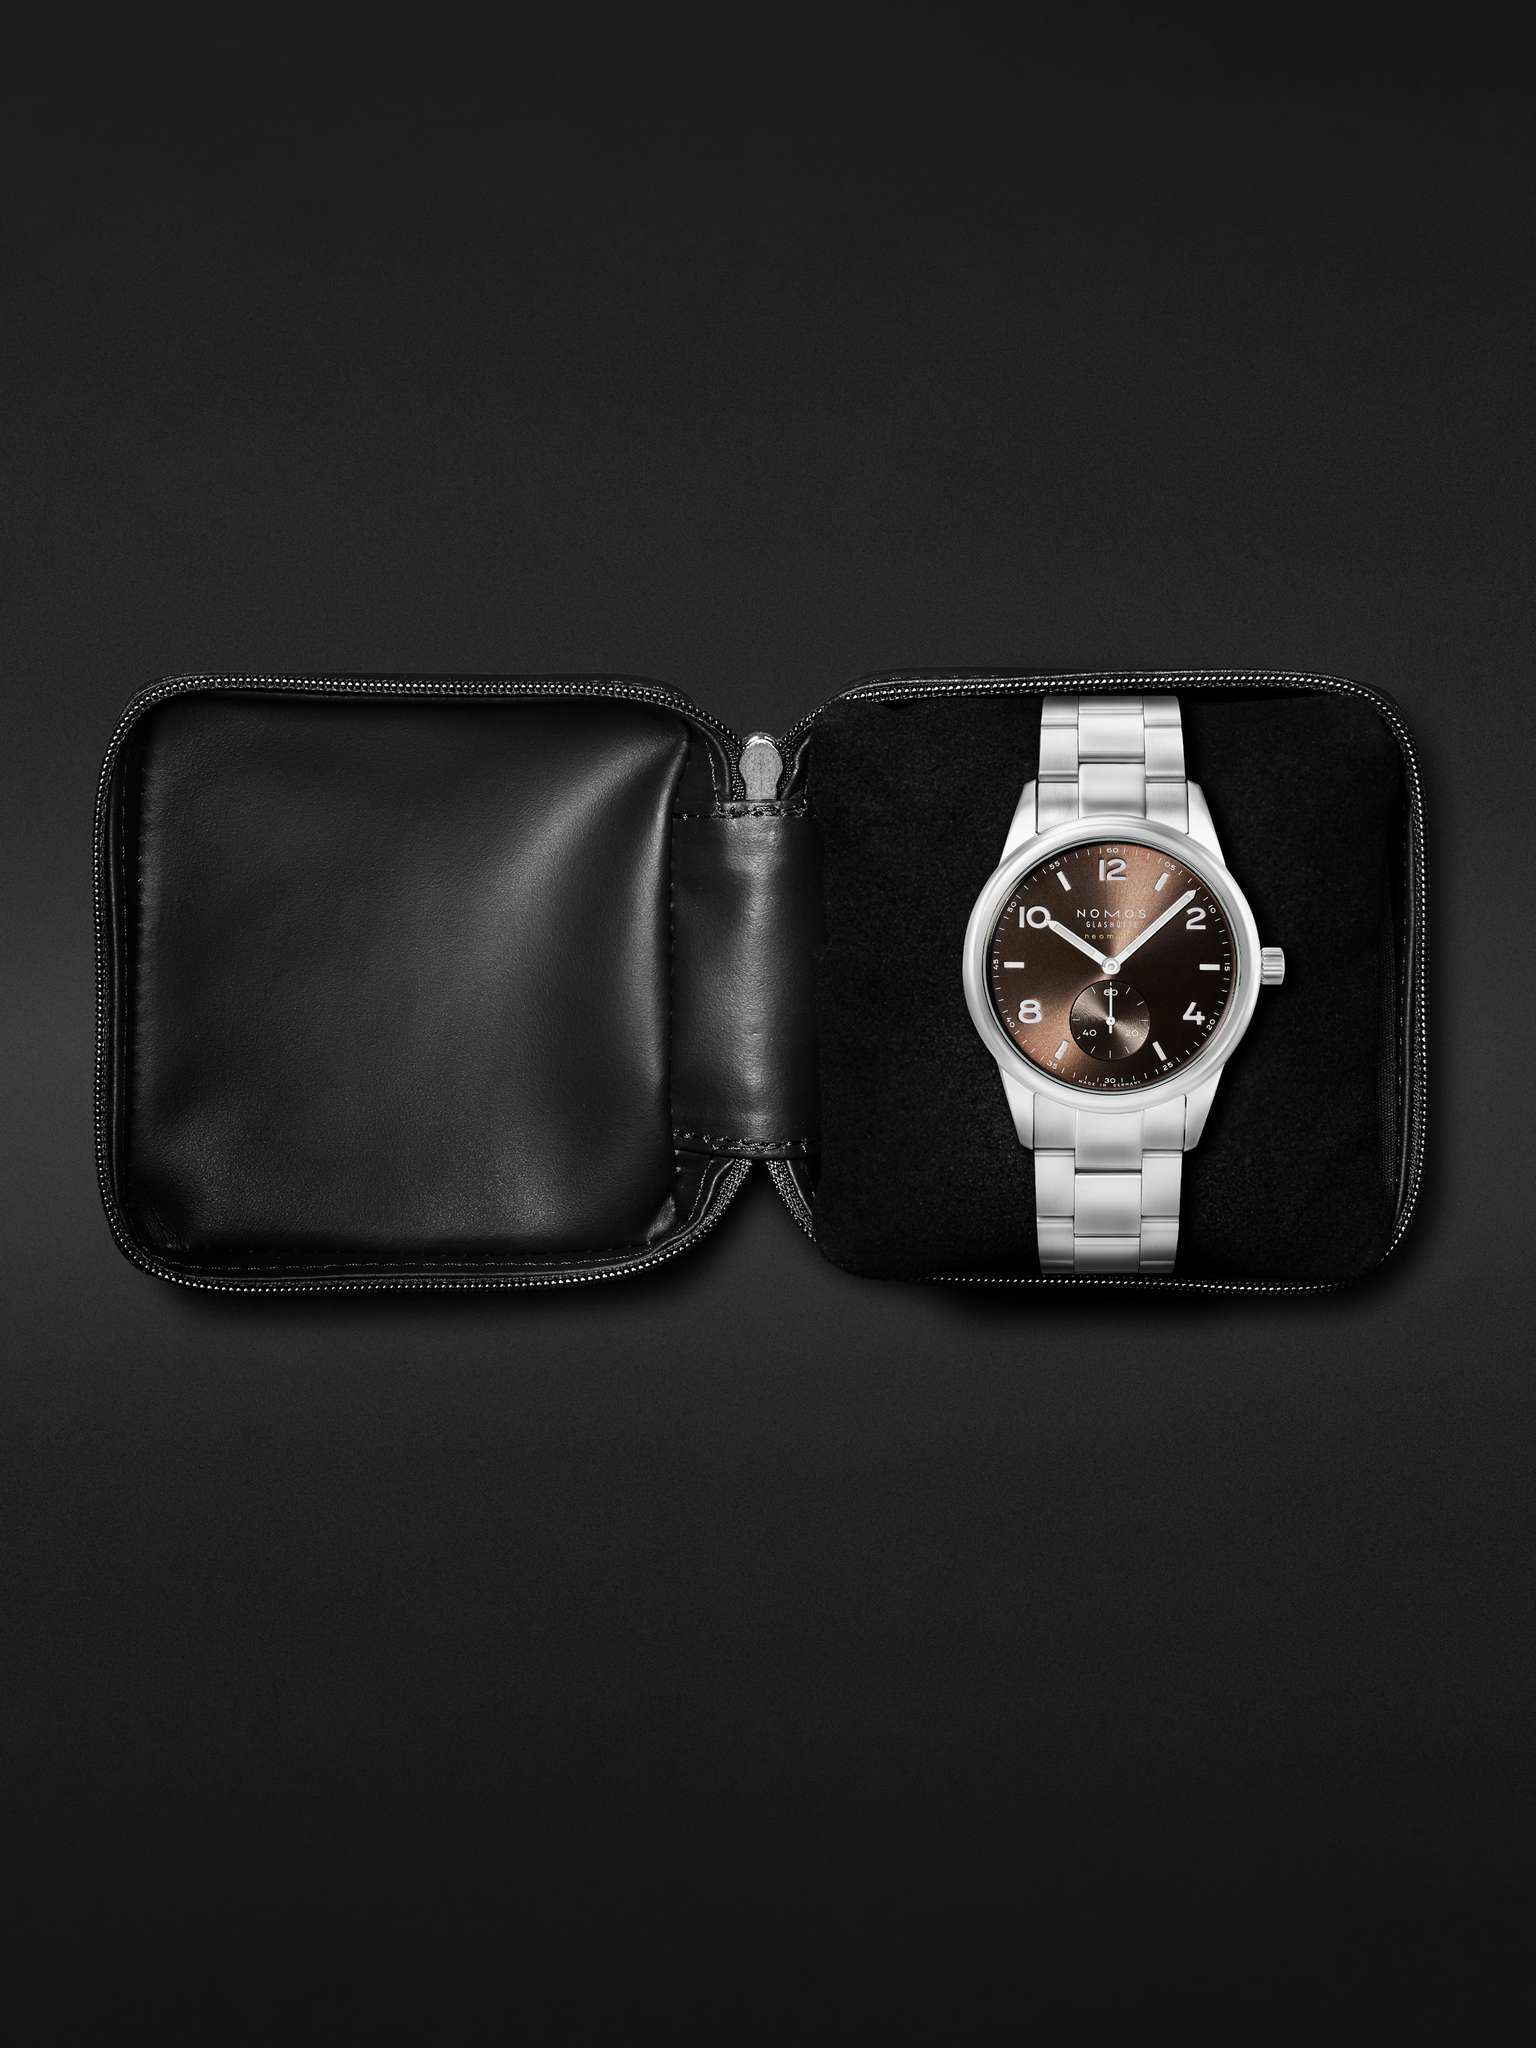 Club Sport Neomatik Automatic 39.5mm Stainless Steel Watch, Ref. No. 760 - 5